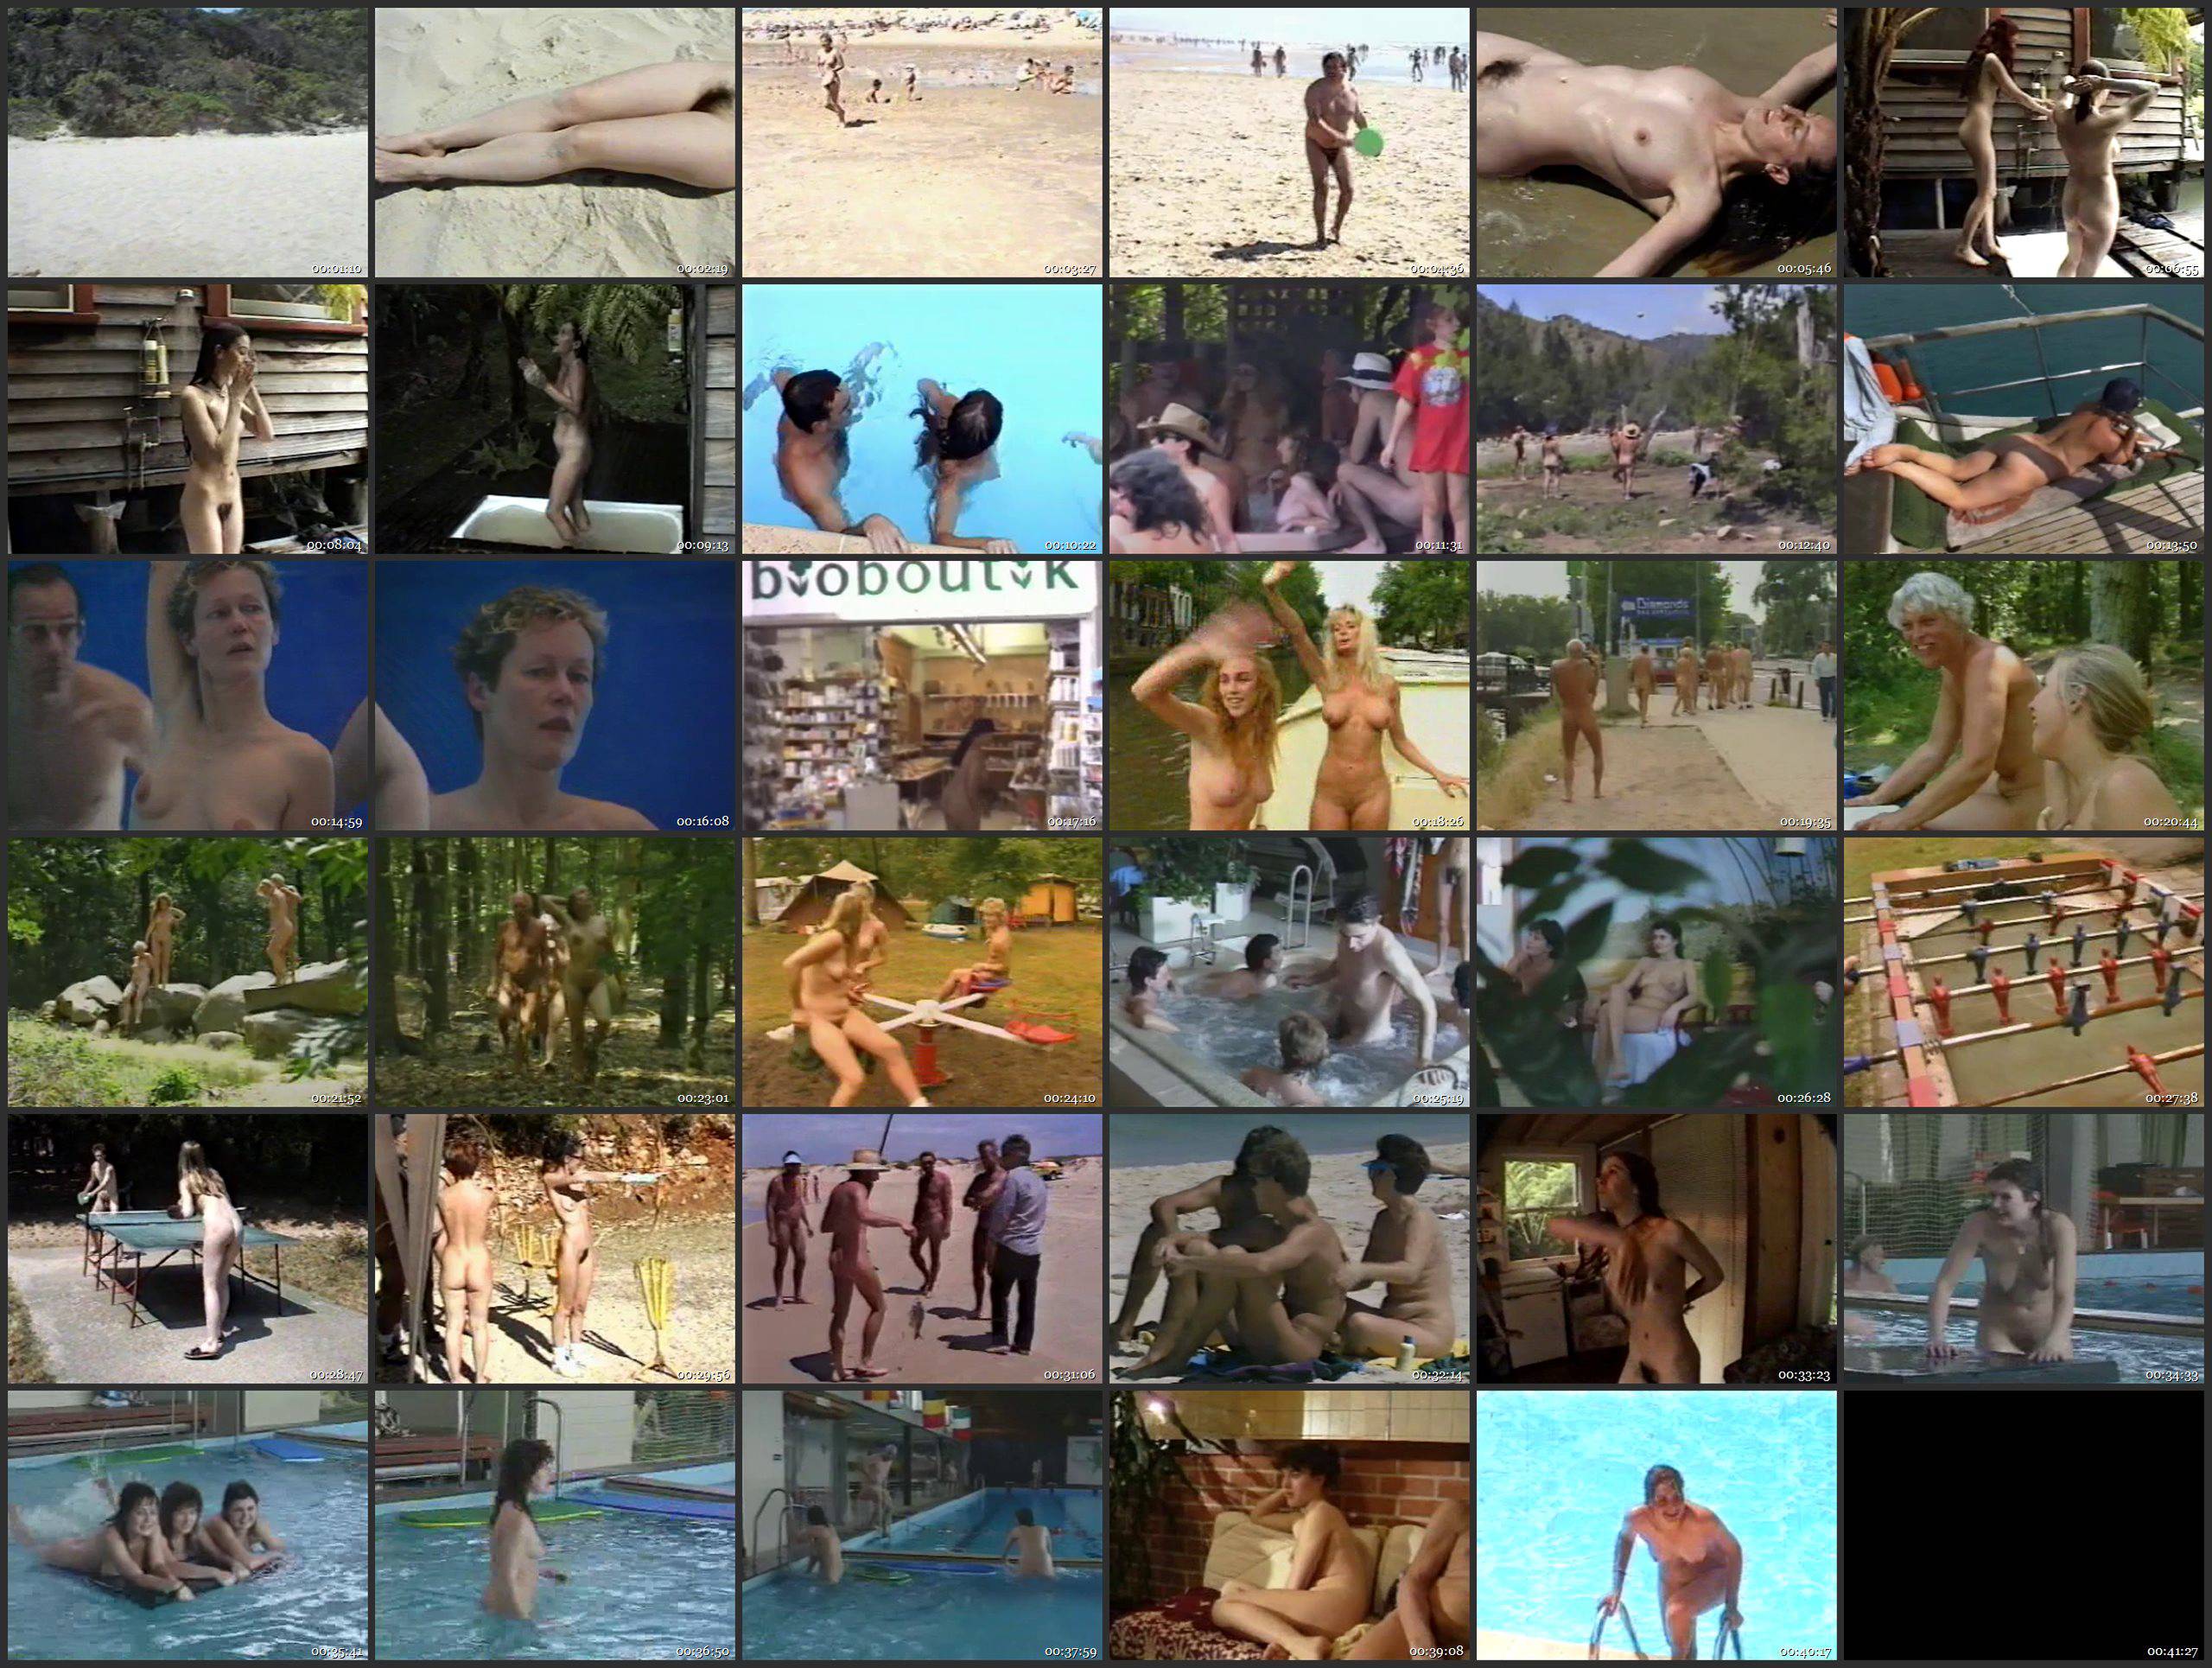 FKK Videos-Nudist Videos Collection - BartDude - Thumbnails